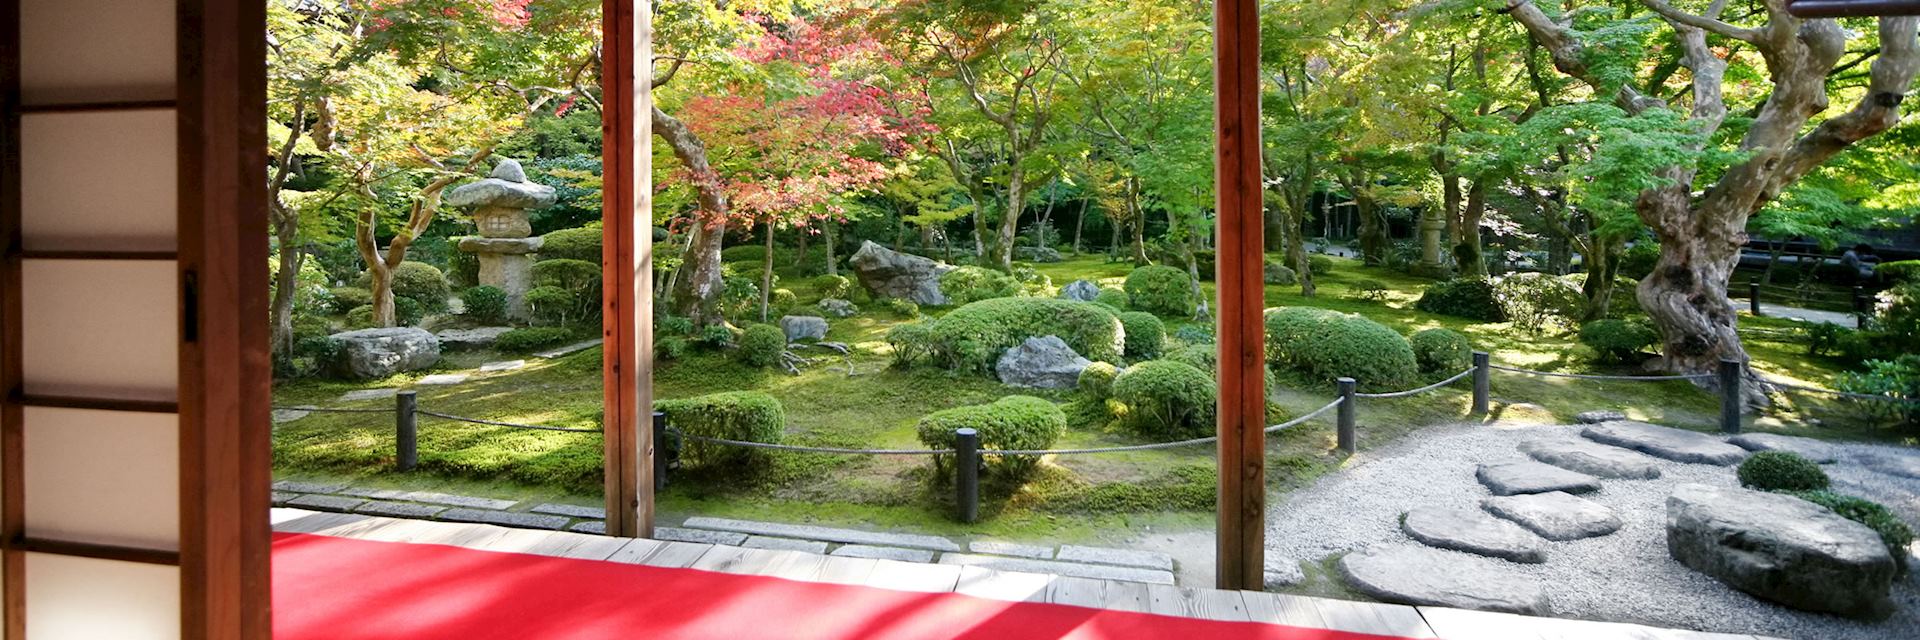 Japanese Rock Garden, Kyoto